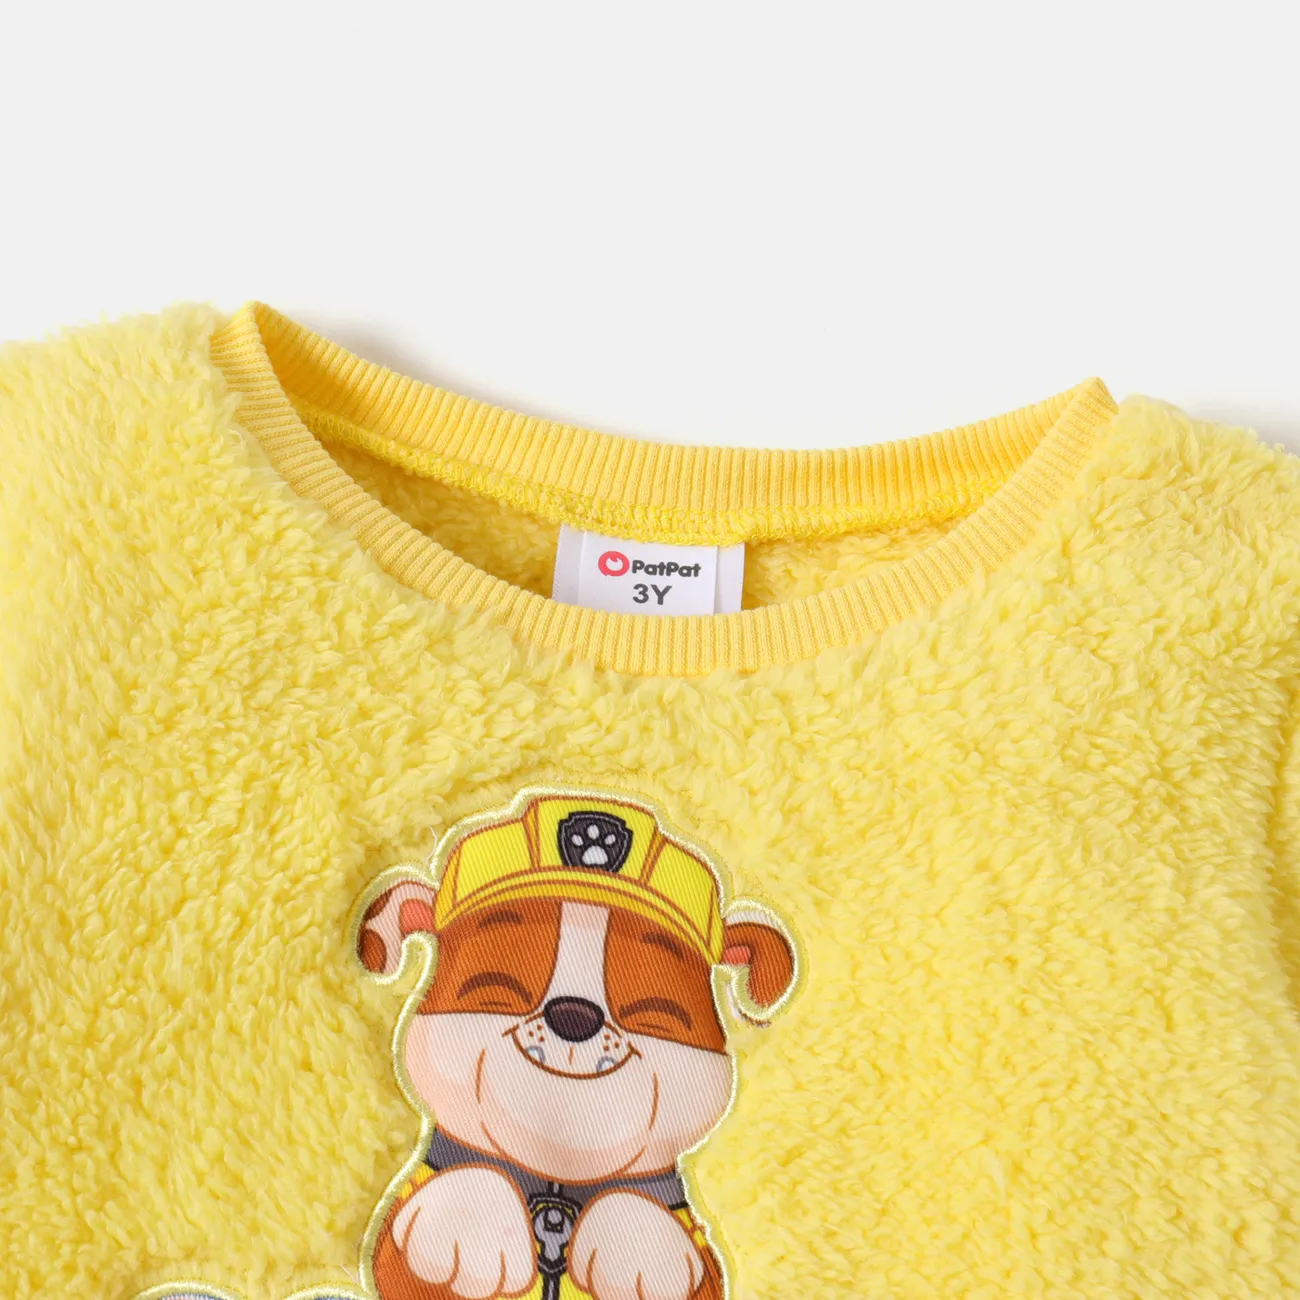 PAW Patrol Toddler Girl/Boy Embroidered Fleece Cotton Sweatshirt Yellow big image 1